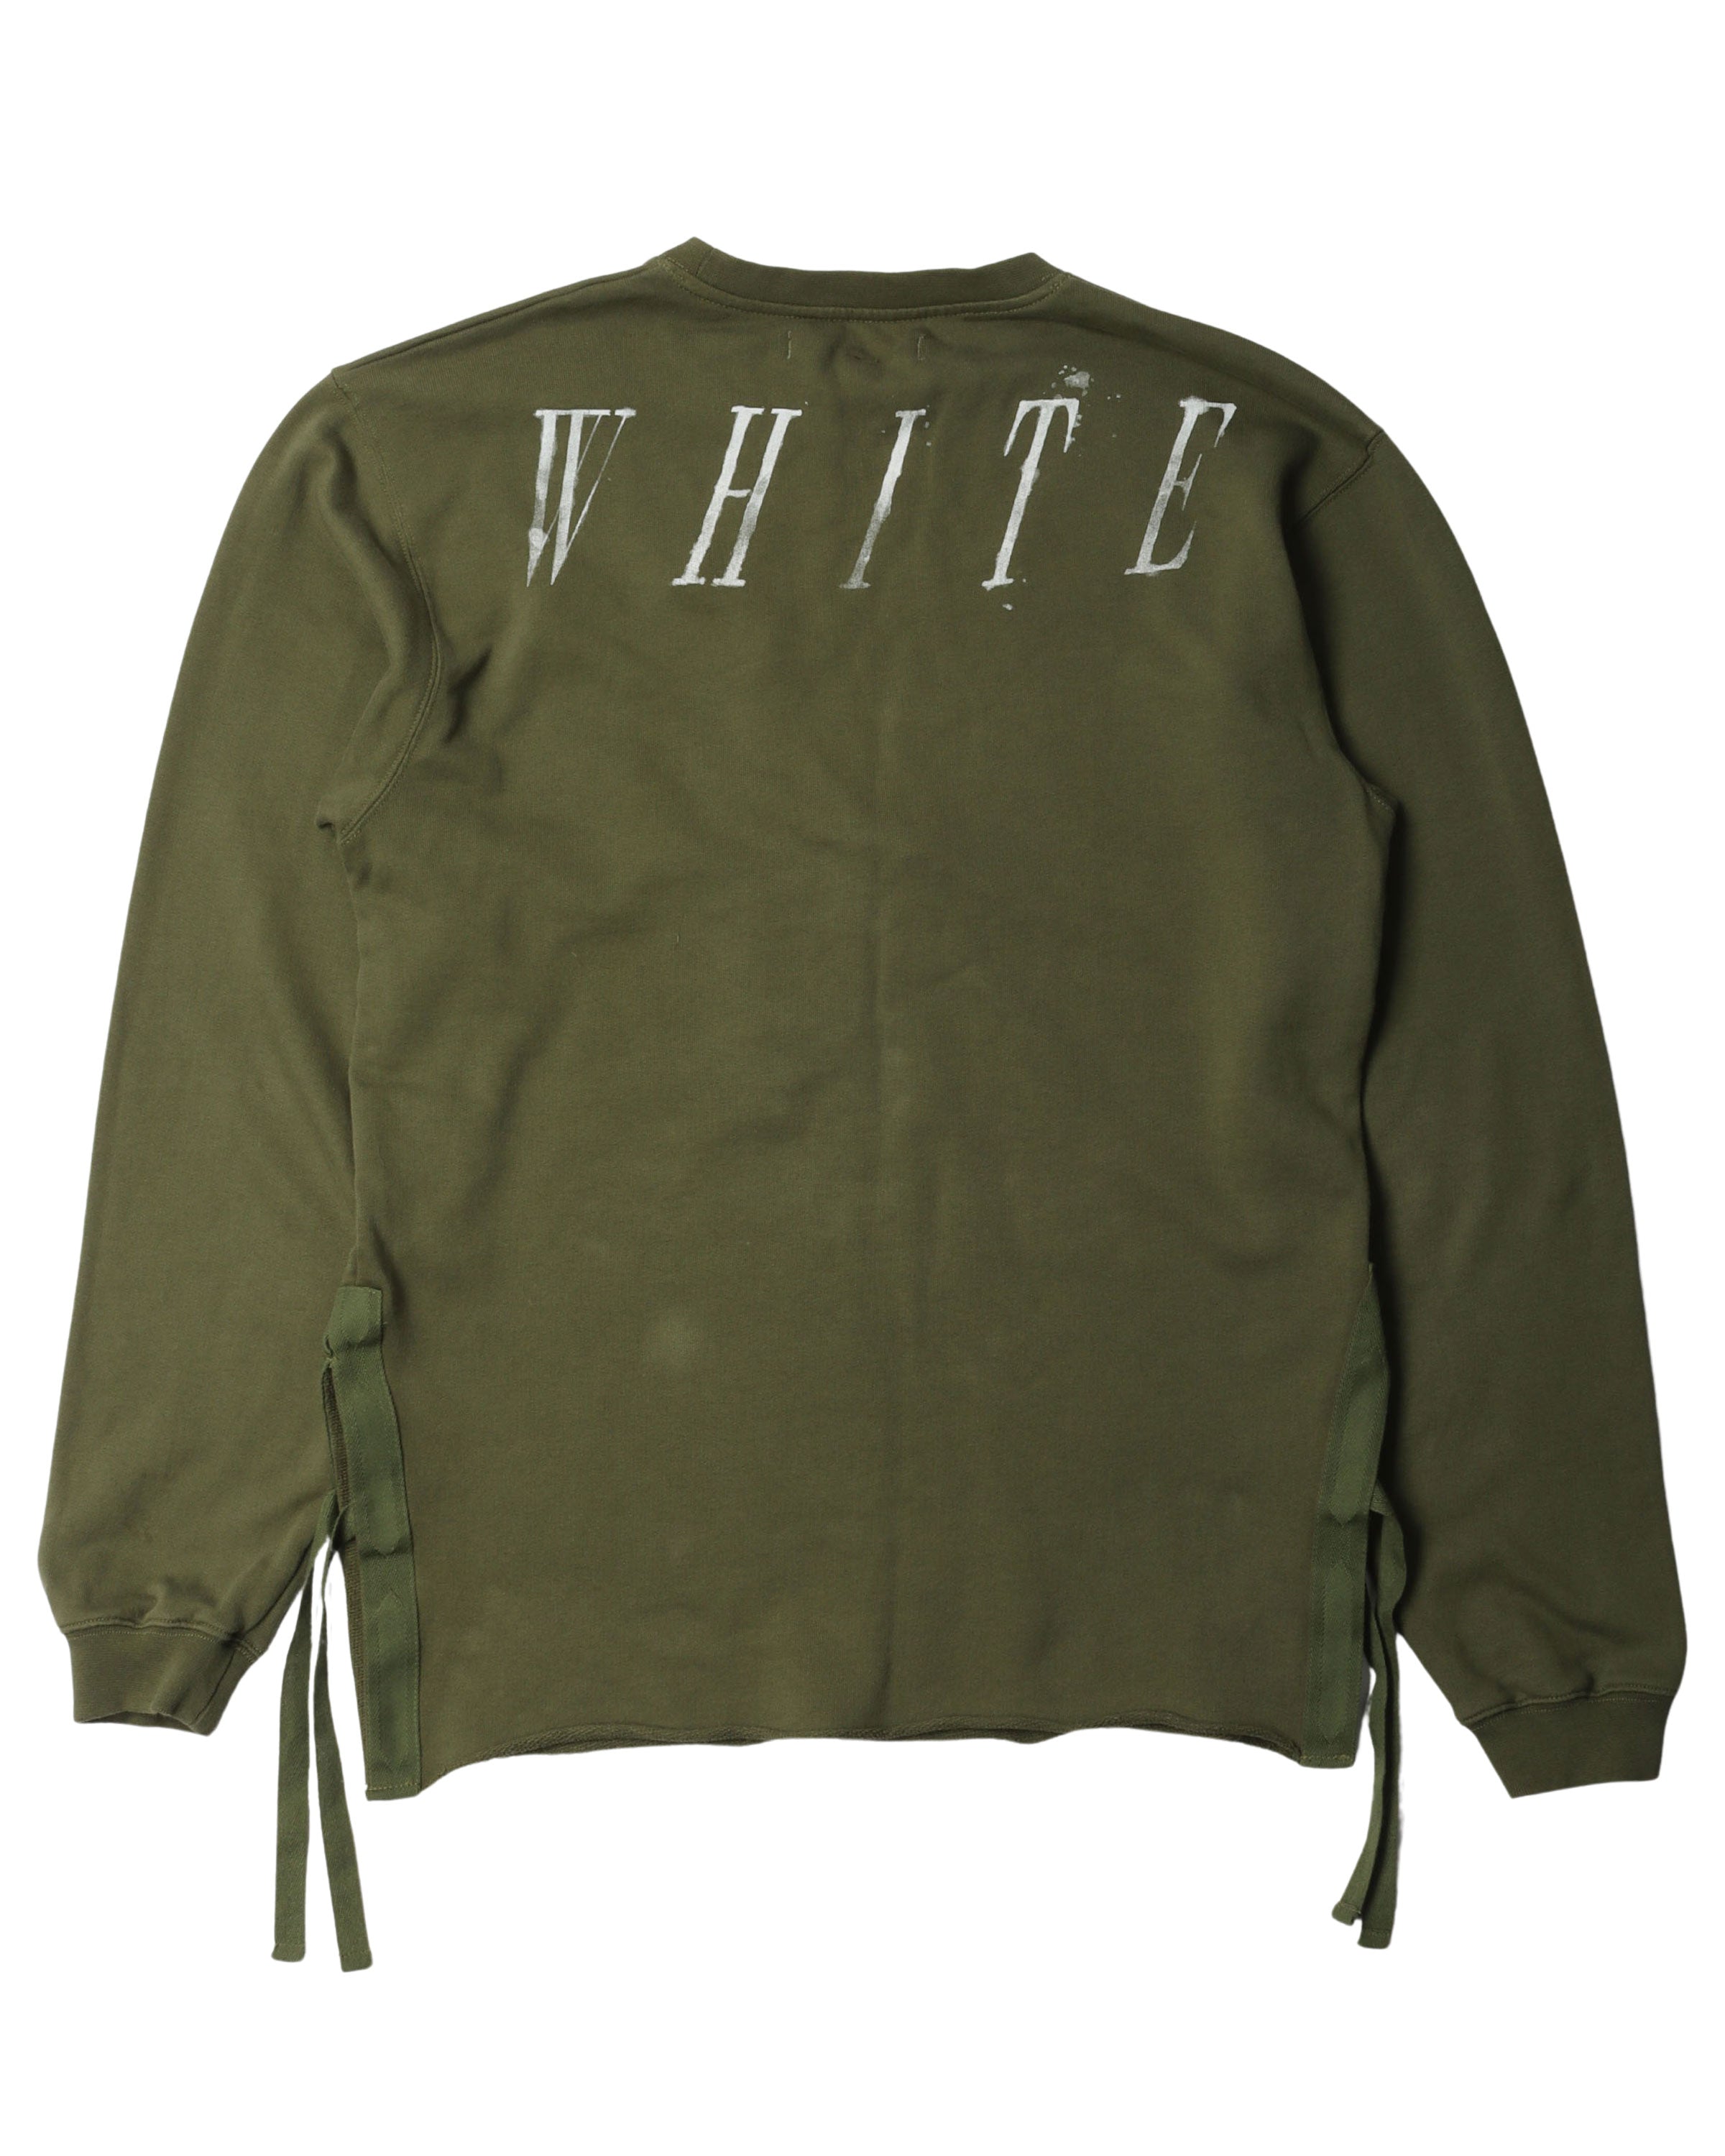 "White" Crewneck Sweatshirt